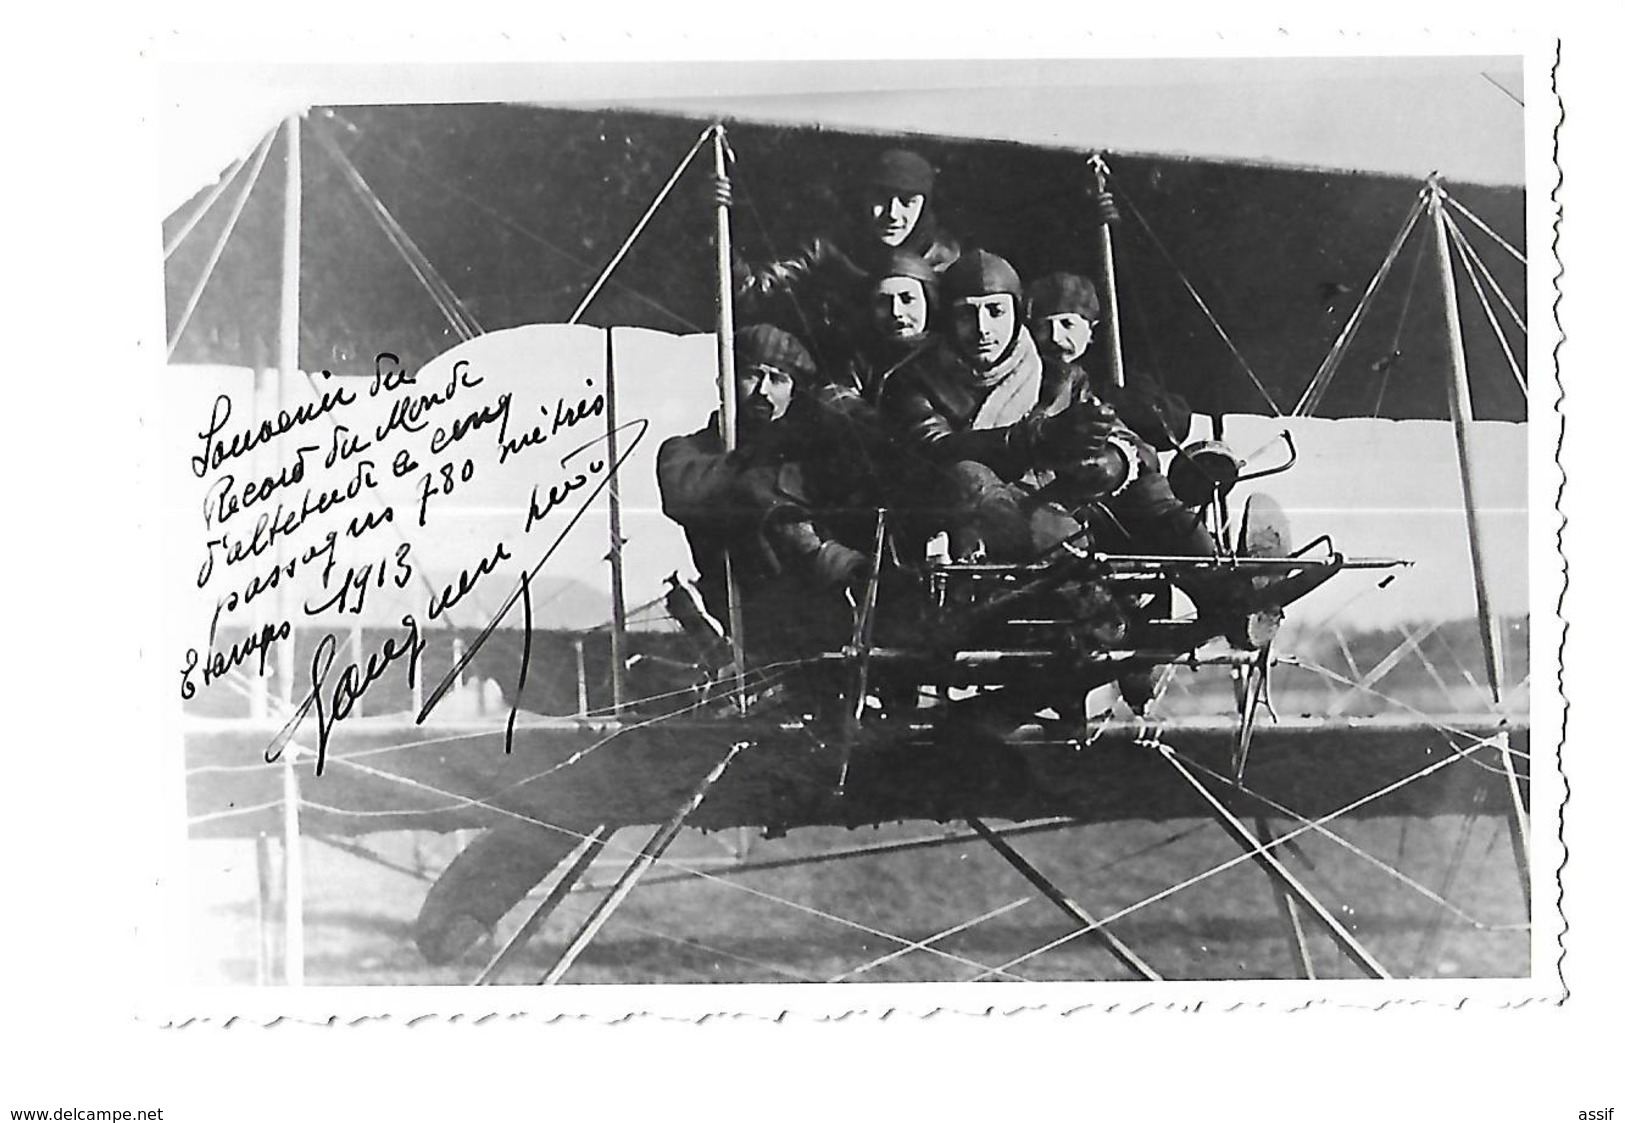 LEON GOUGENHEIM RECORD ALTITUDE ETAMPES 1913 PHOTO AUTOGRAPHE ORIGINAL AUTOGRAPH AVIATION + Delporte /FREE SHIPPING R - Aviación